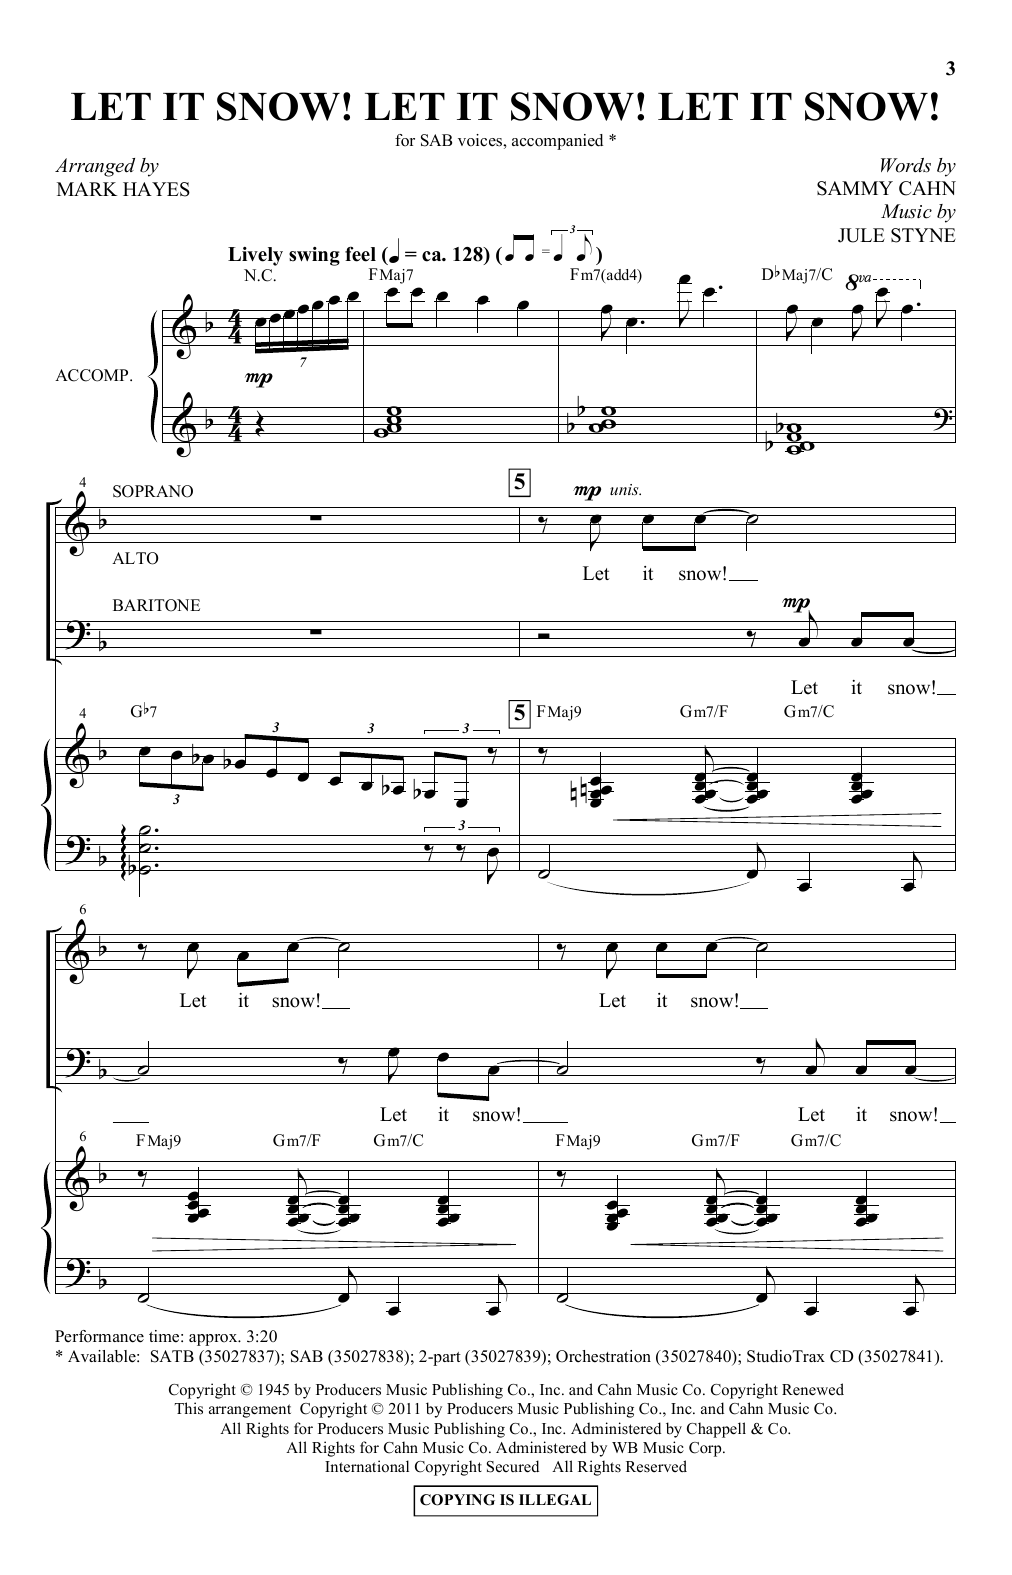 Sammy Cahn & Julie Styne Let It Snow! Let It Snow! Let It Snow! Sheet Music Notes & Chords for 2-Part Choir - Download or Print PDF